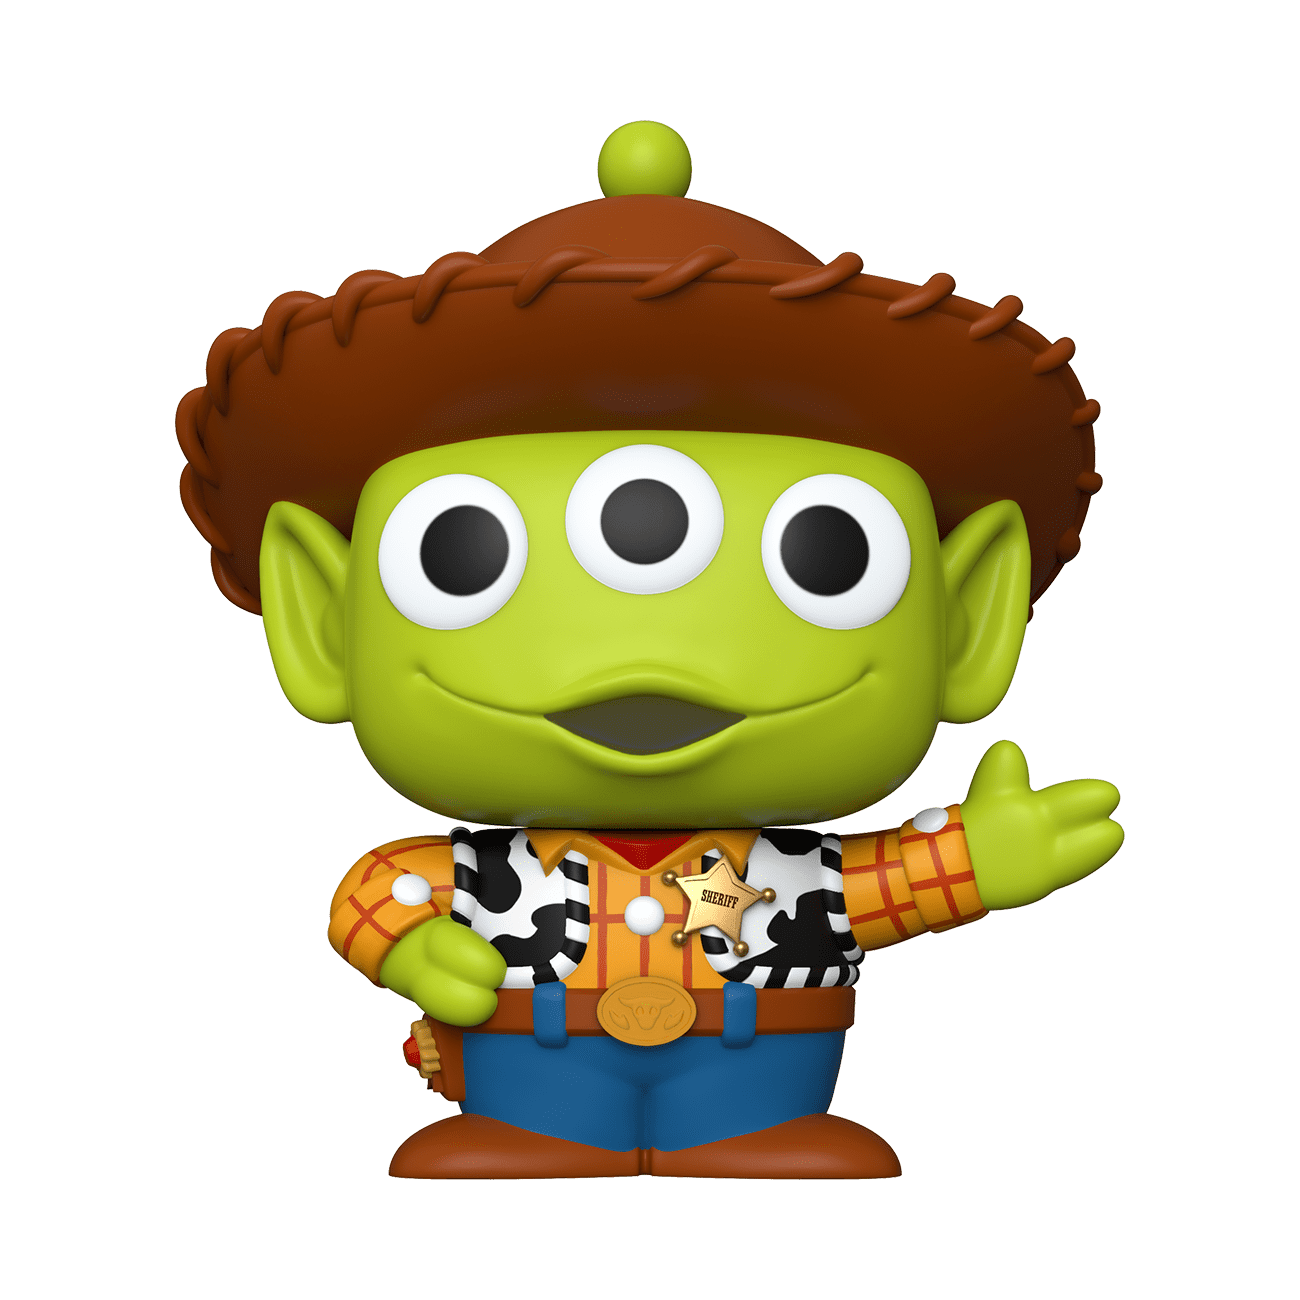 Pixar Toy Story 25th Anniversary Alien Remix Funko Pops are Live